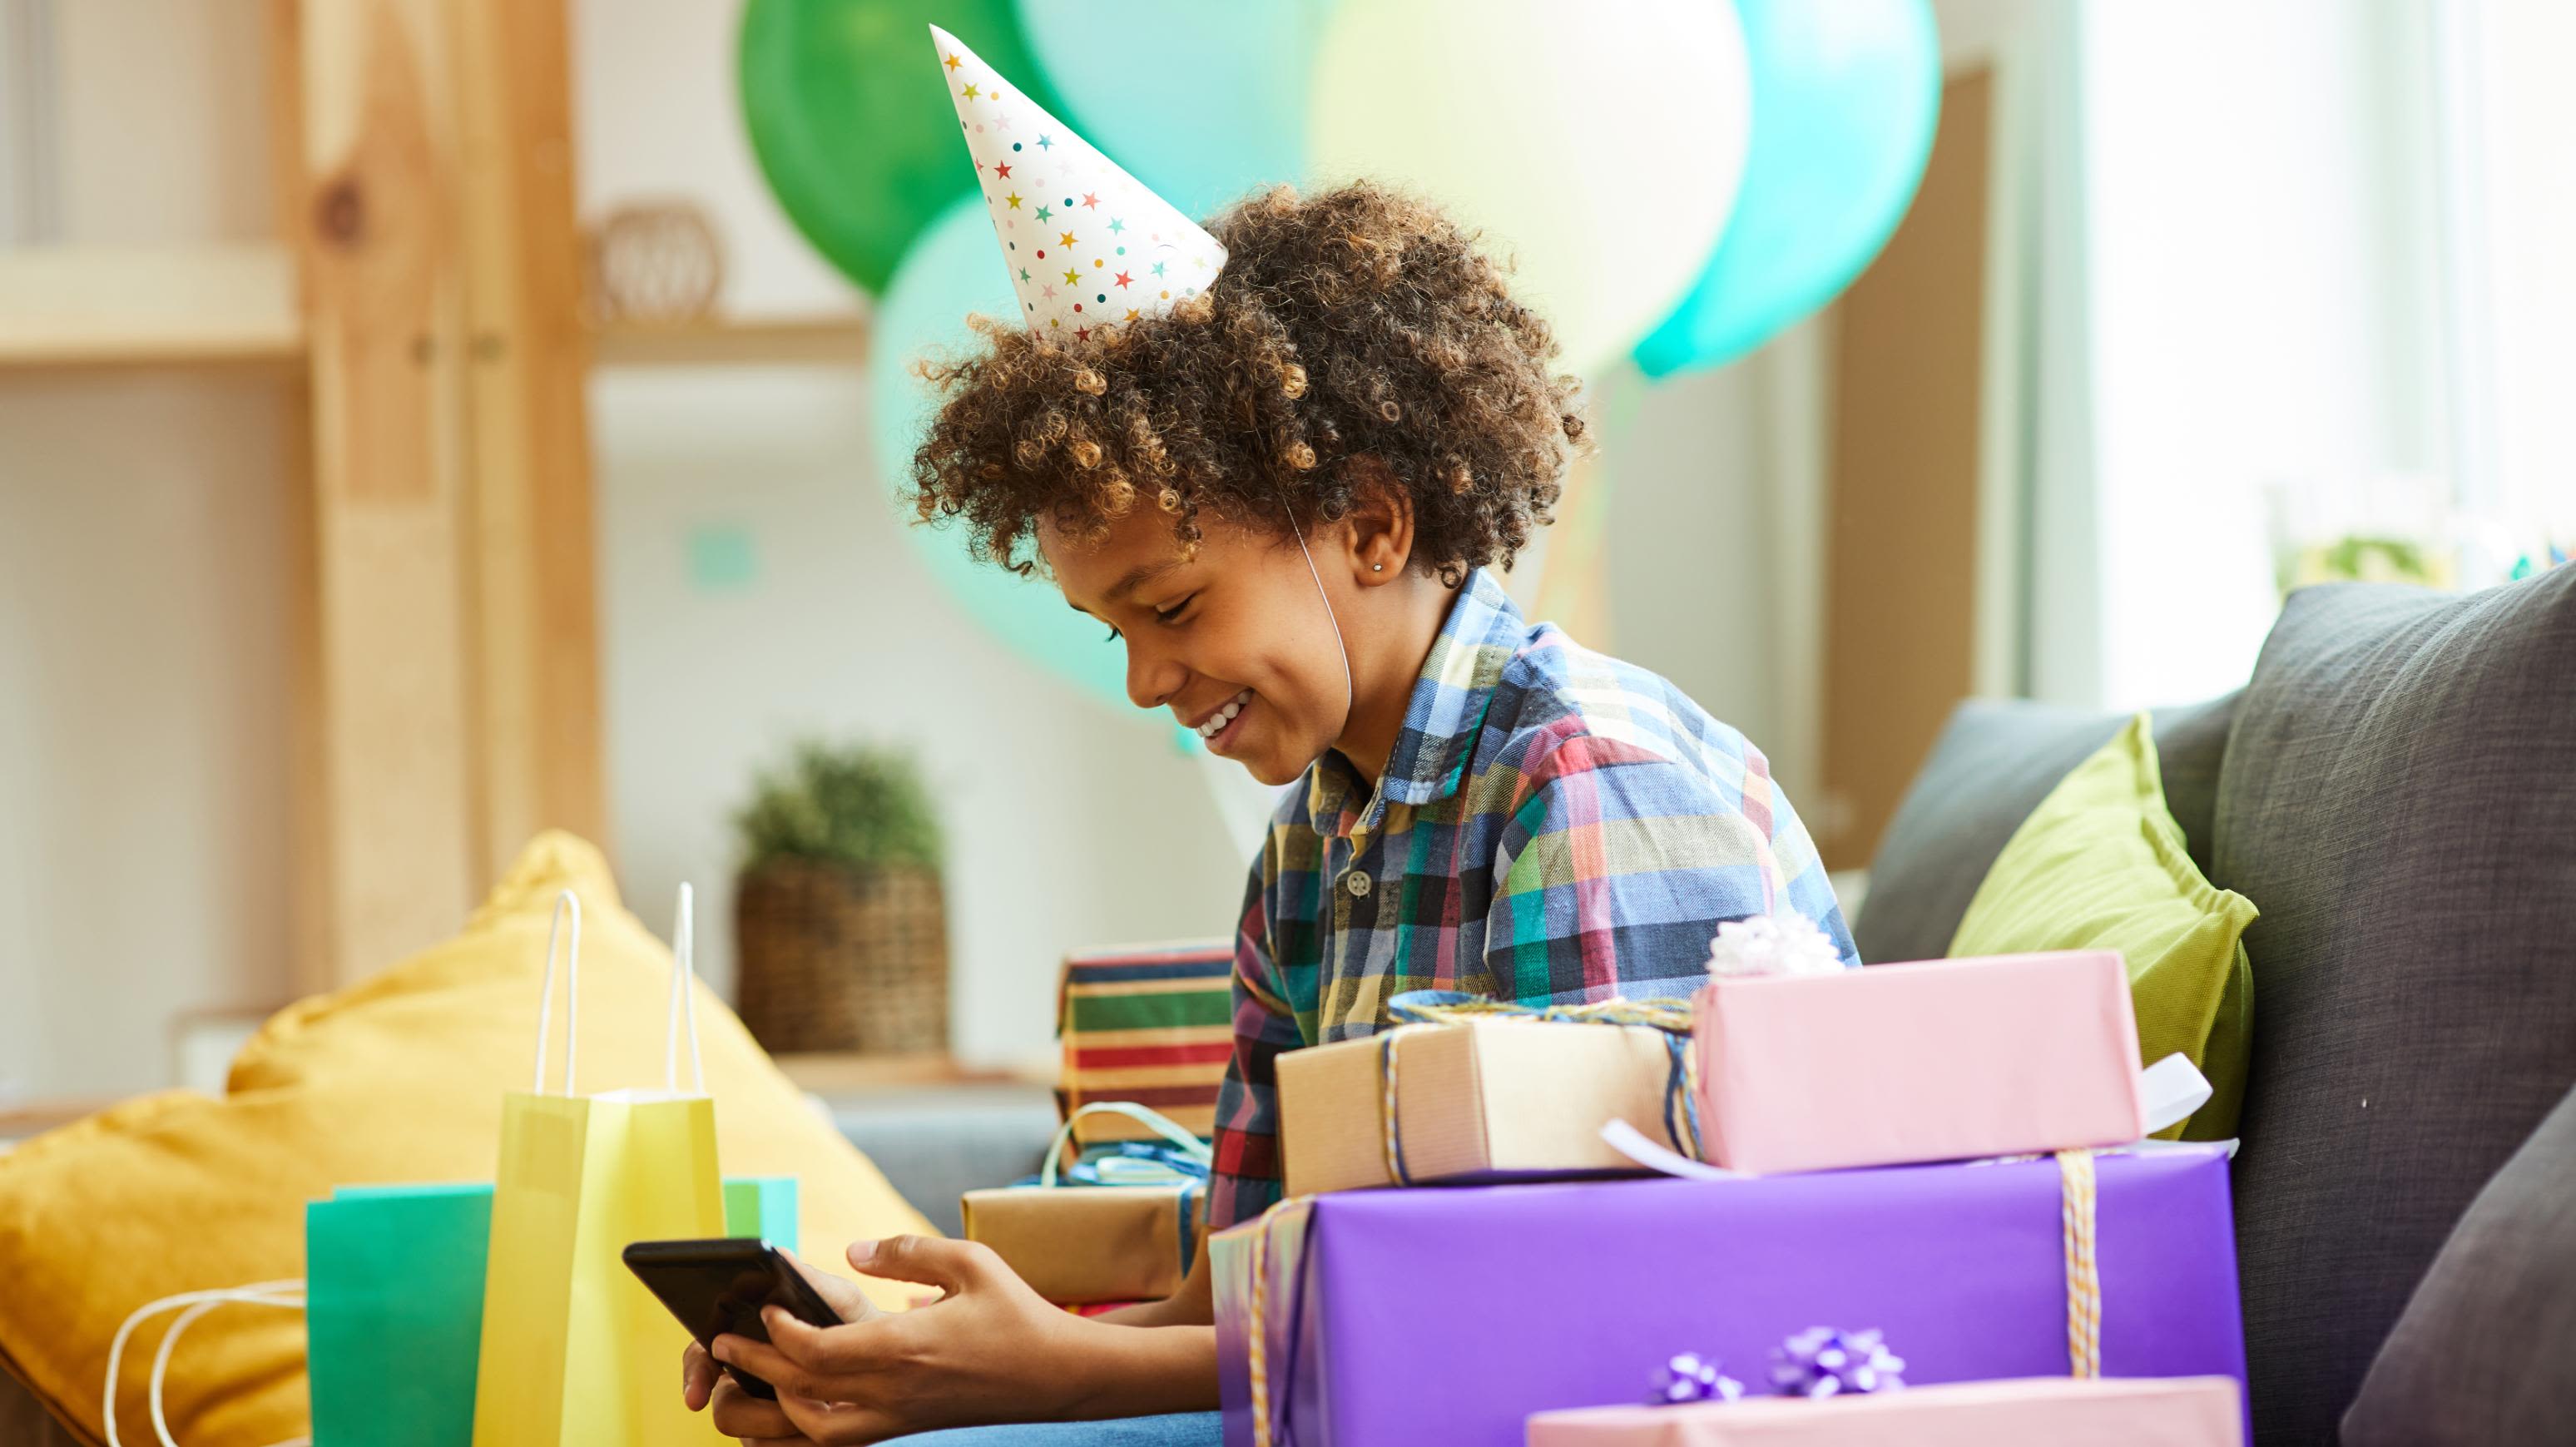 Virtual birthday gift ideas